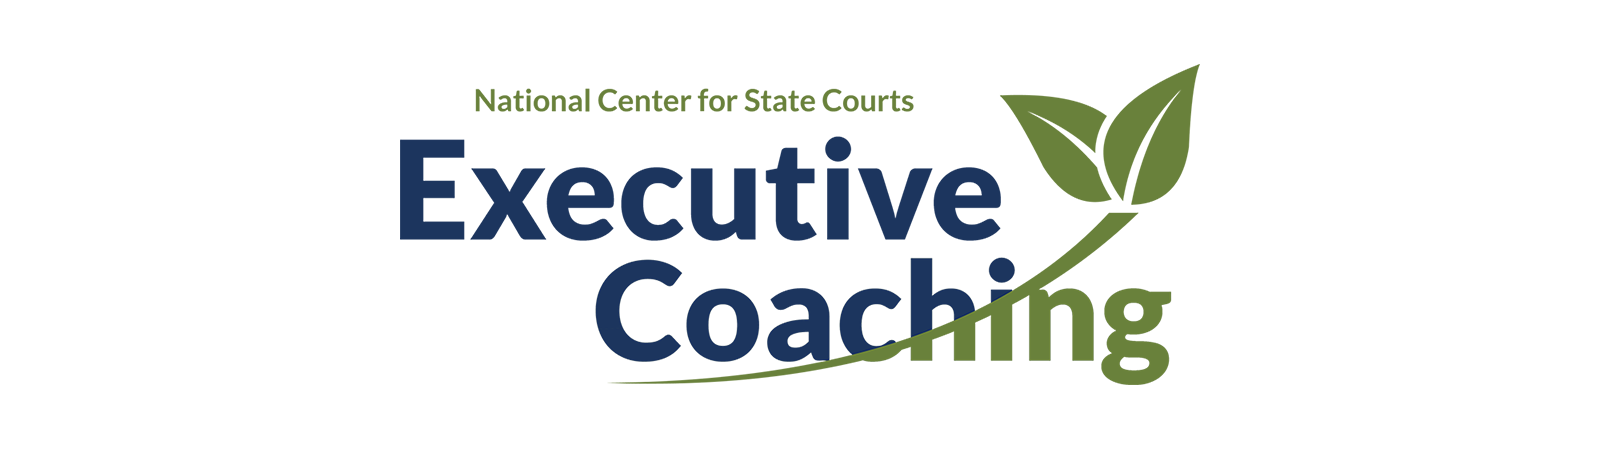 Large image for Executive Coaching banner image